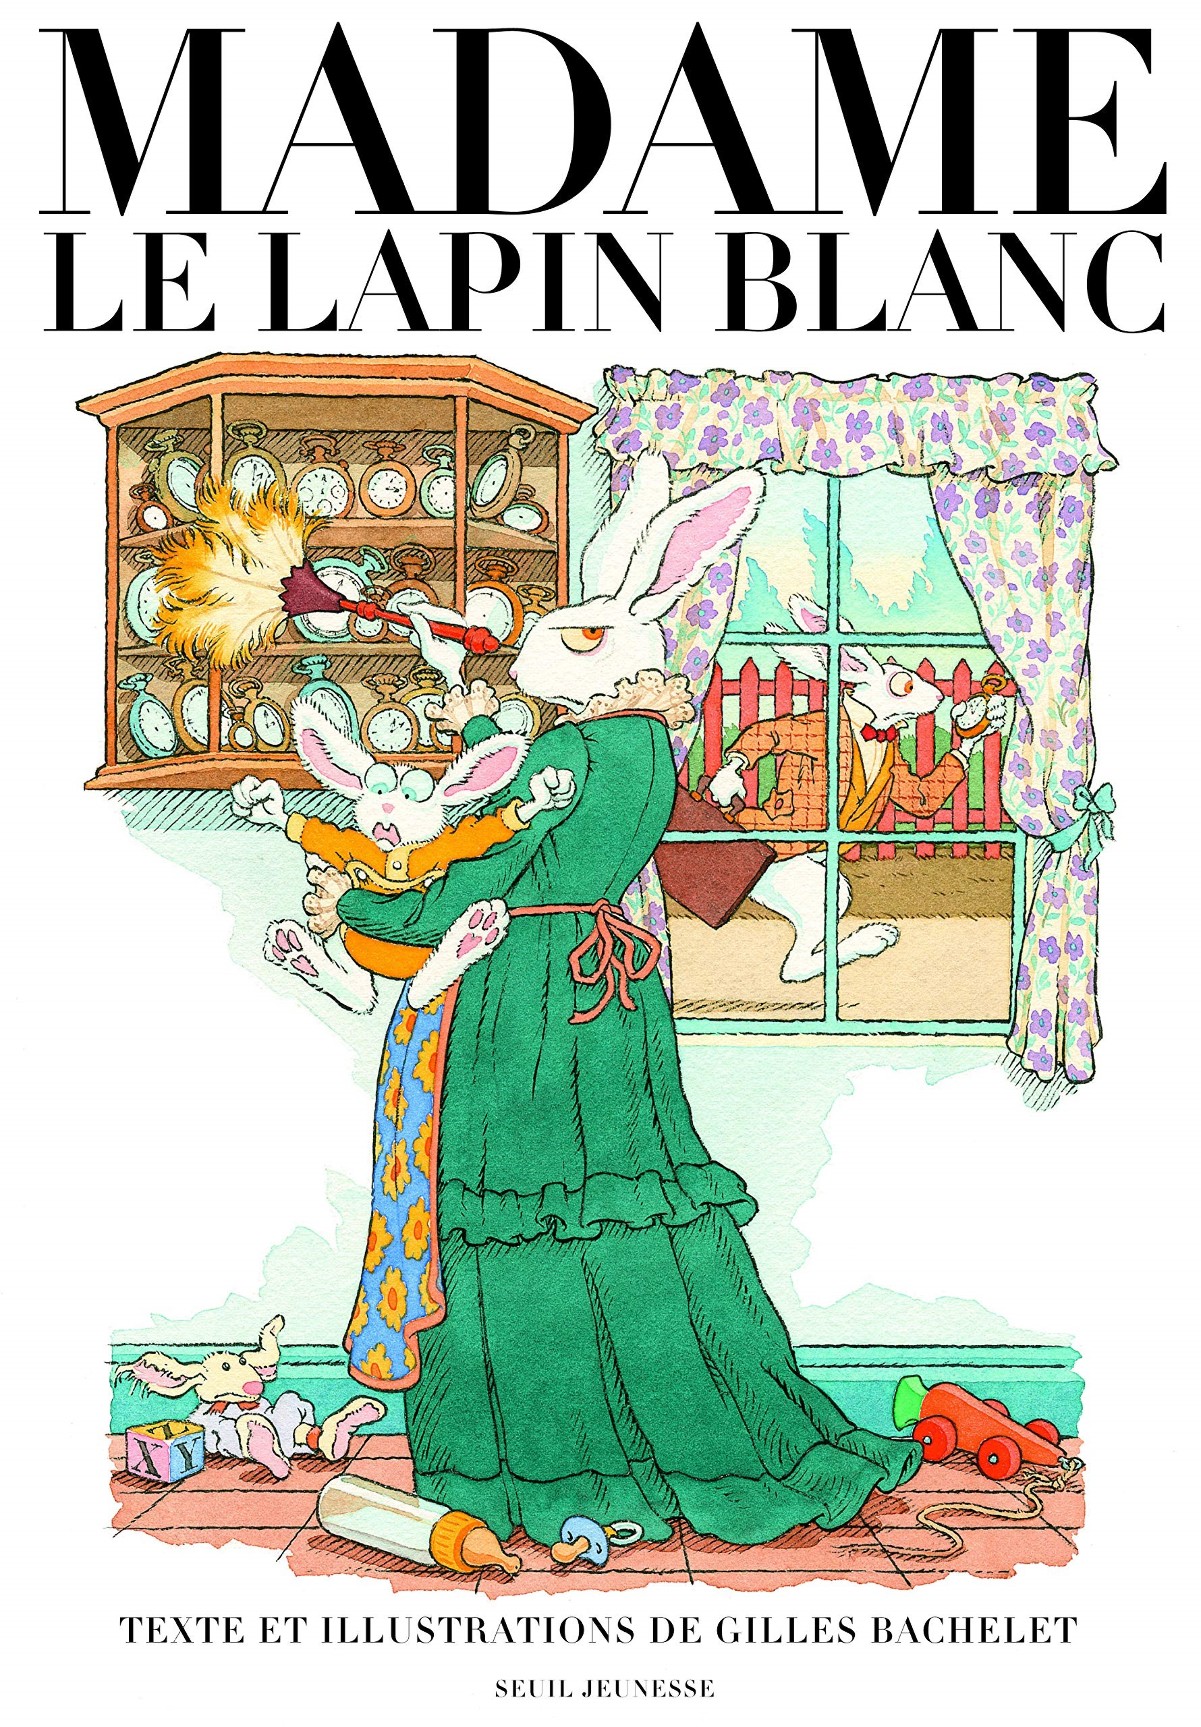 Exposition « Madame le Lapin blanc » de Gilles Bachelet